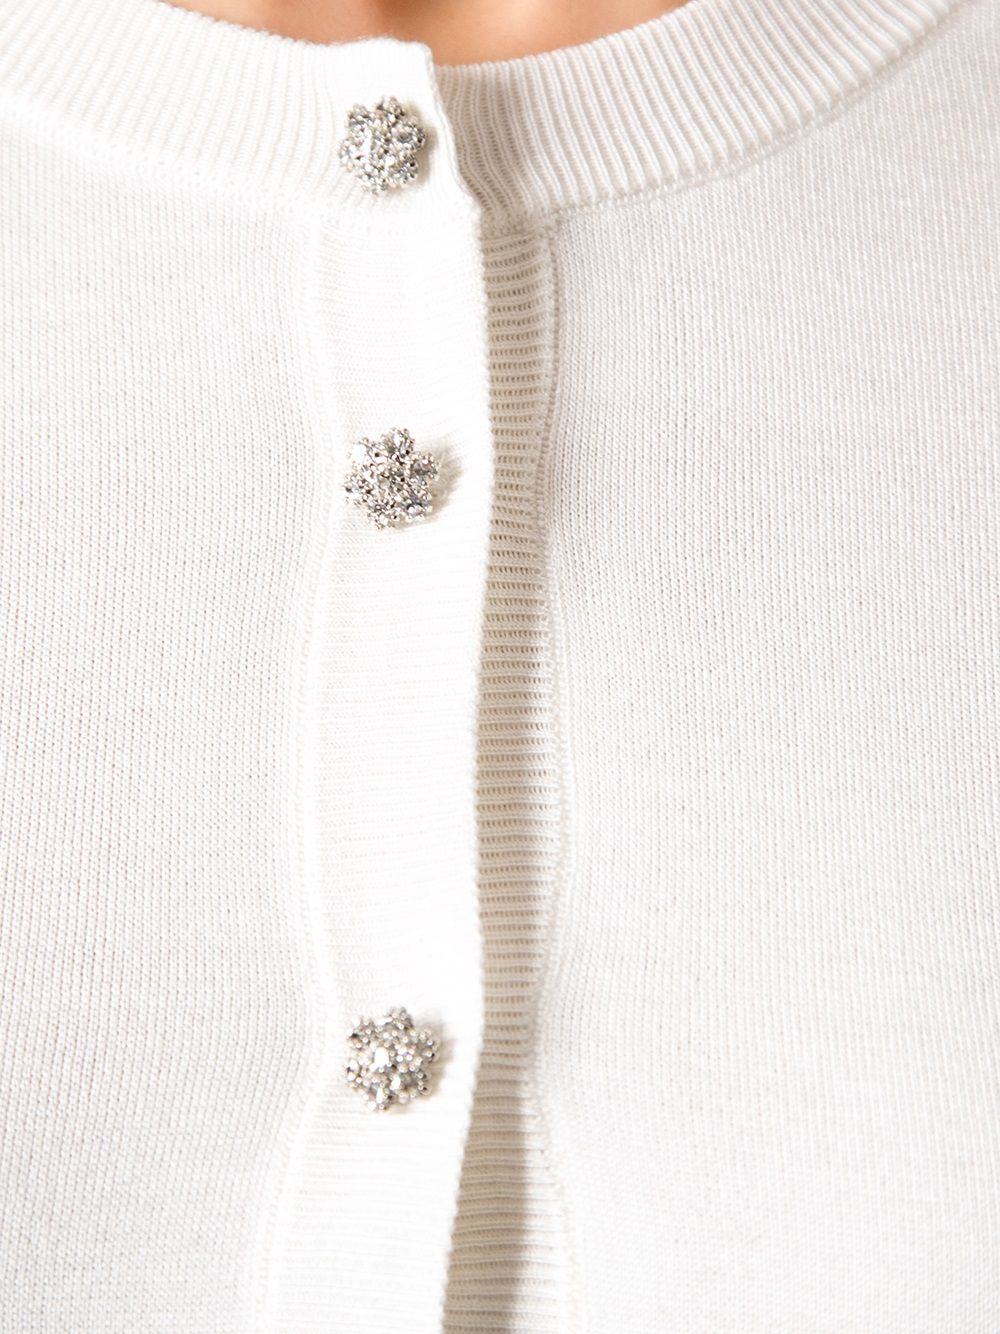 Lyst - Dolce & Gabbana Jewel Button Cardigan in White